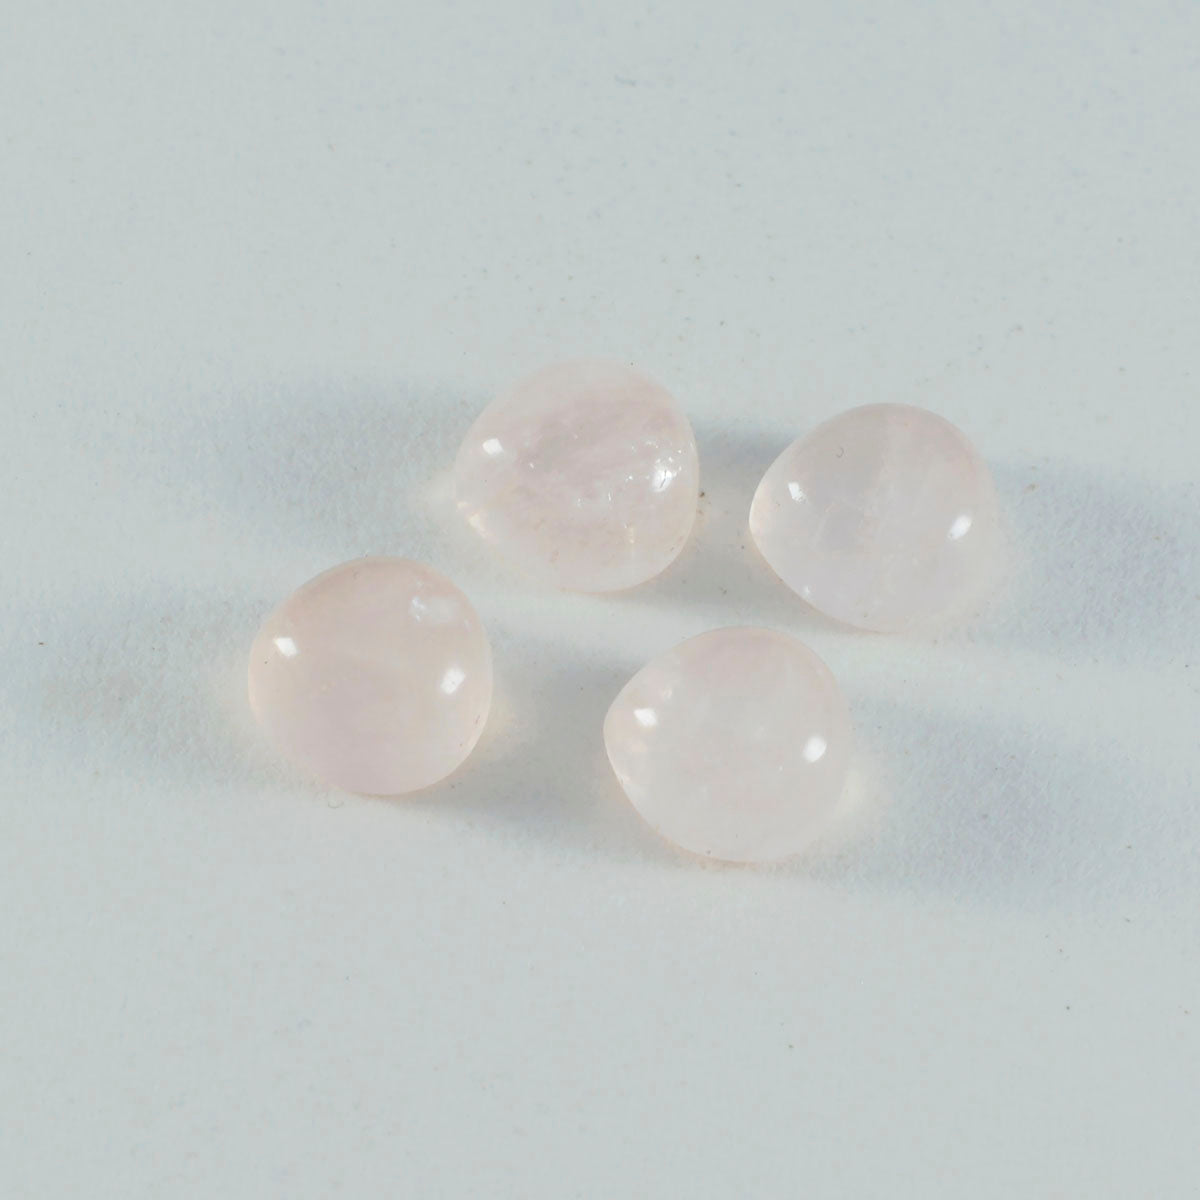 riyogems 1 шт. кабошон из розового кварца 15x15 мм в форме сердца A1, качественный драгоценный камень